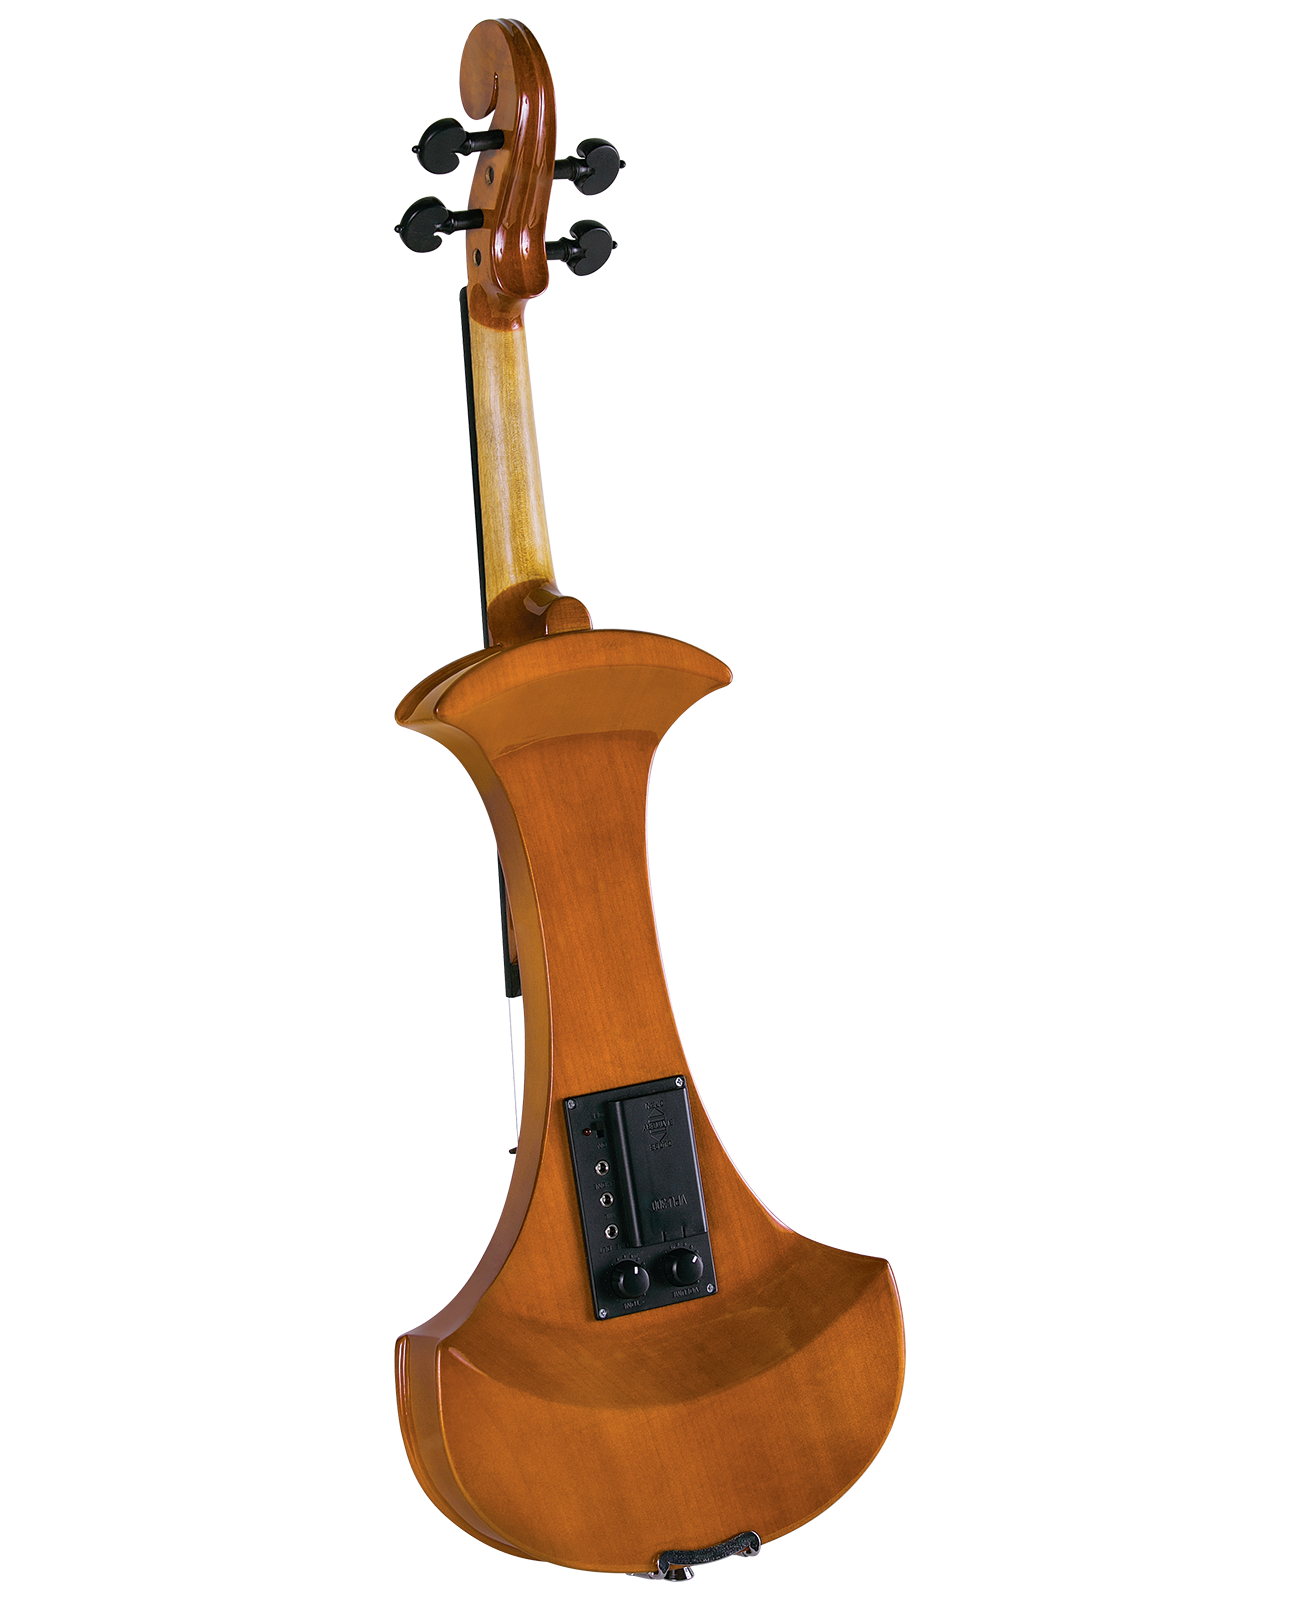 Cremona SV-180E Premier Student Electric Violin Outfit – 4/4 Size